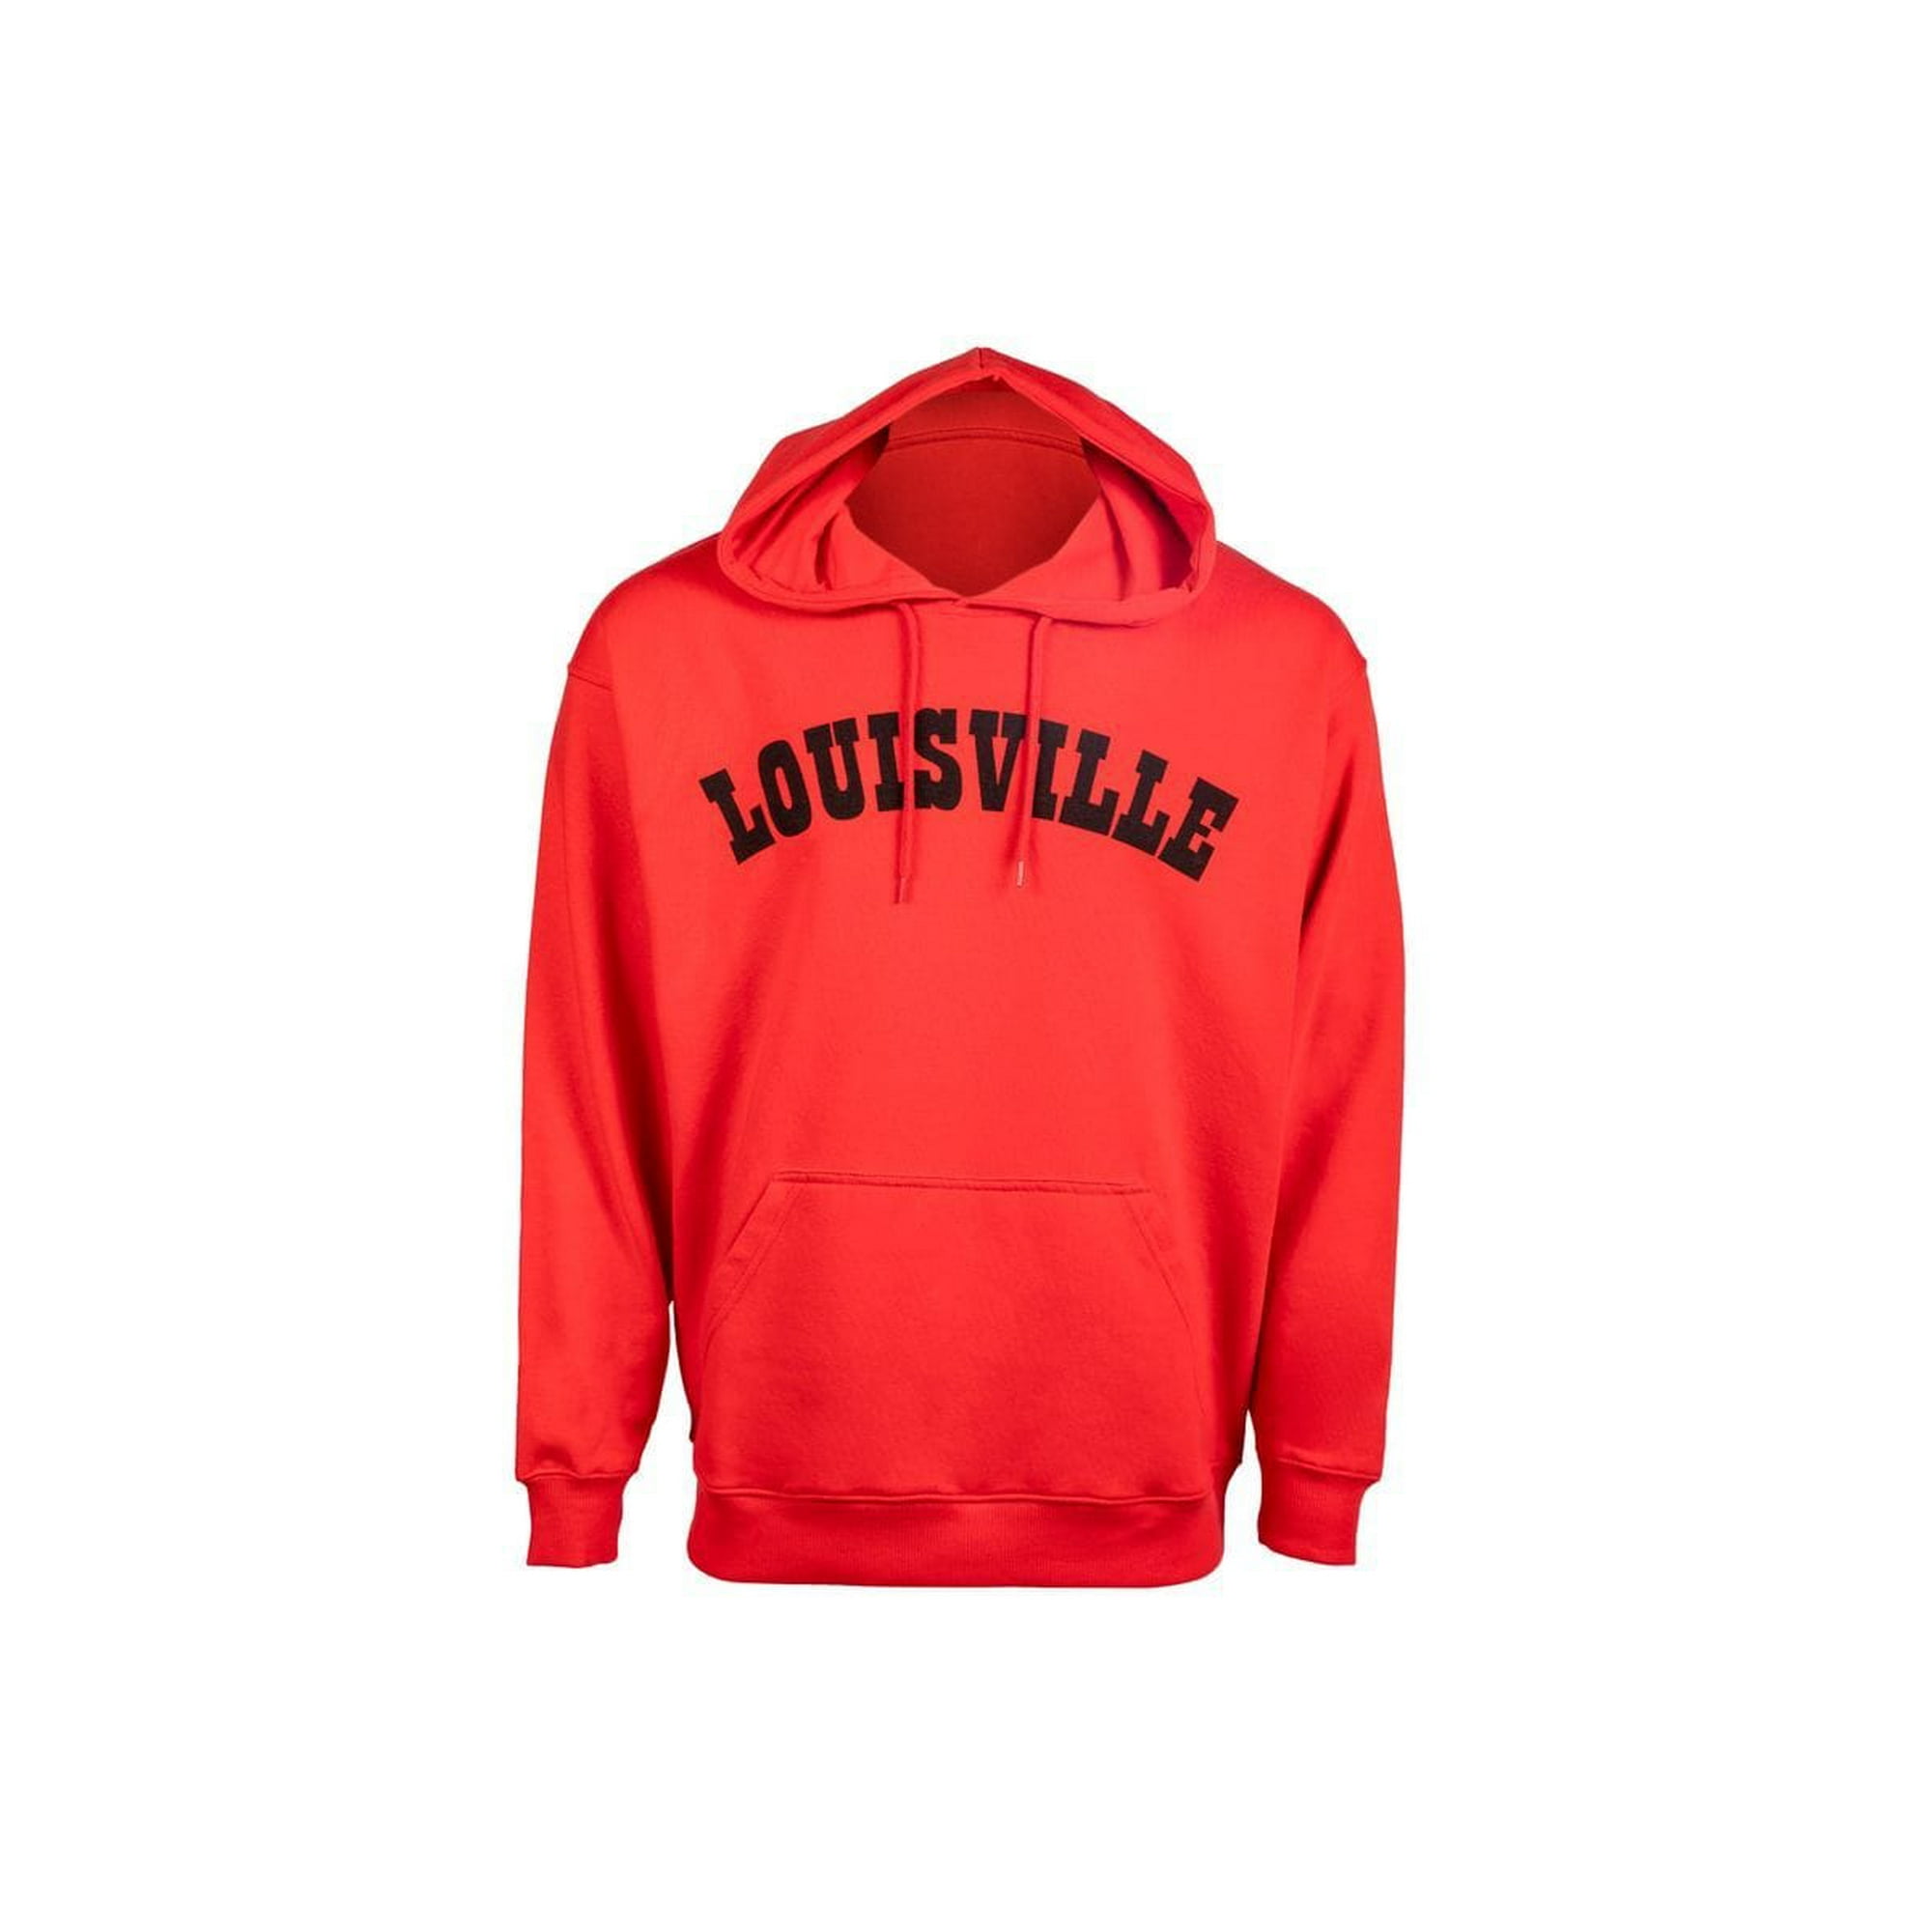 university of louisville hoodie sweatshirt plus size